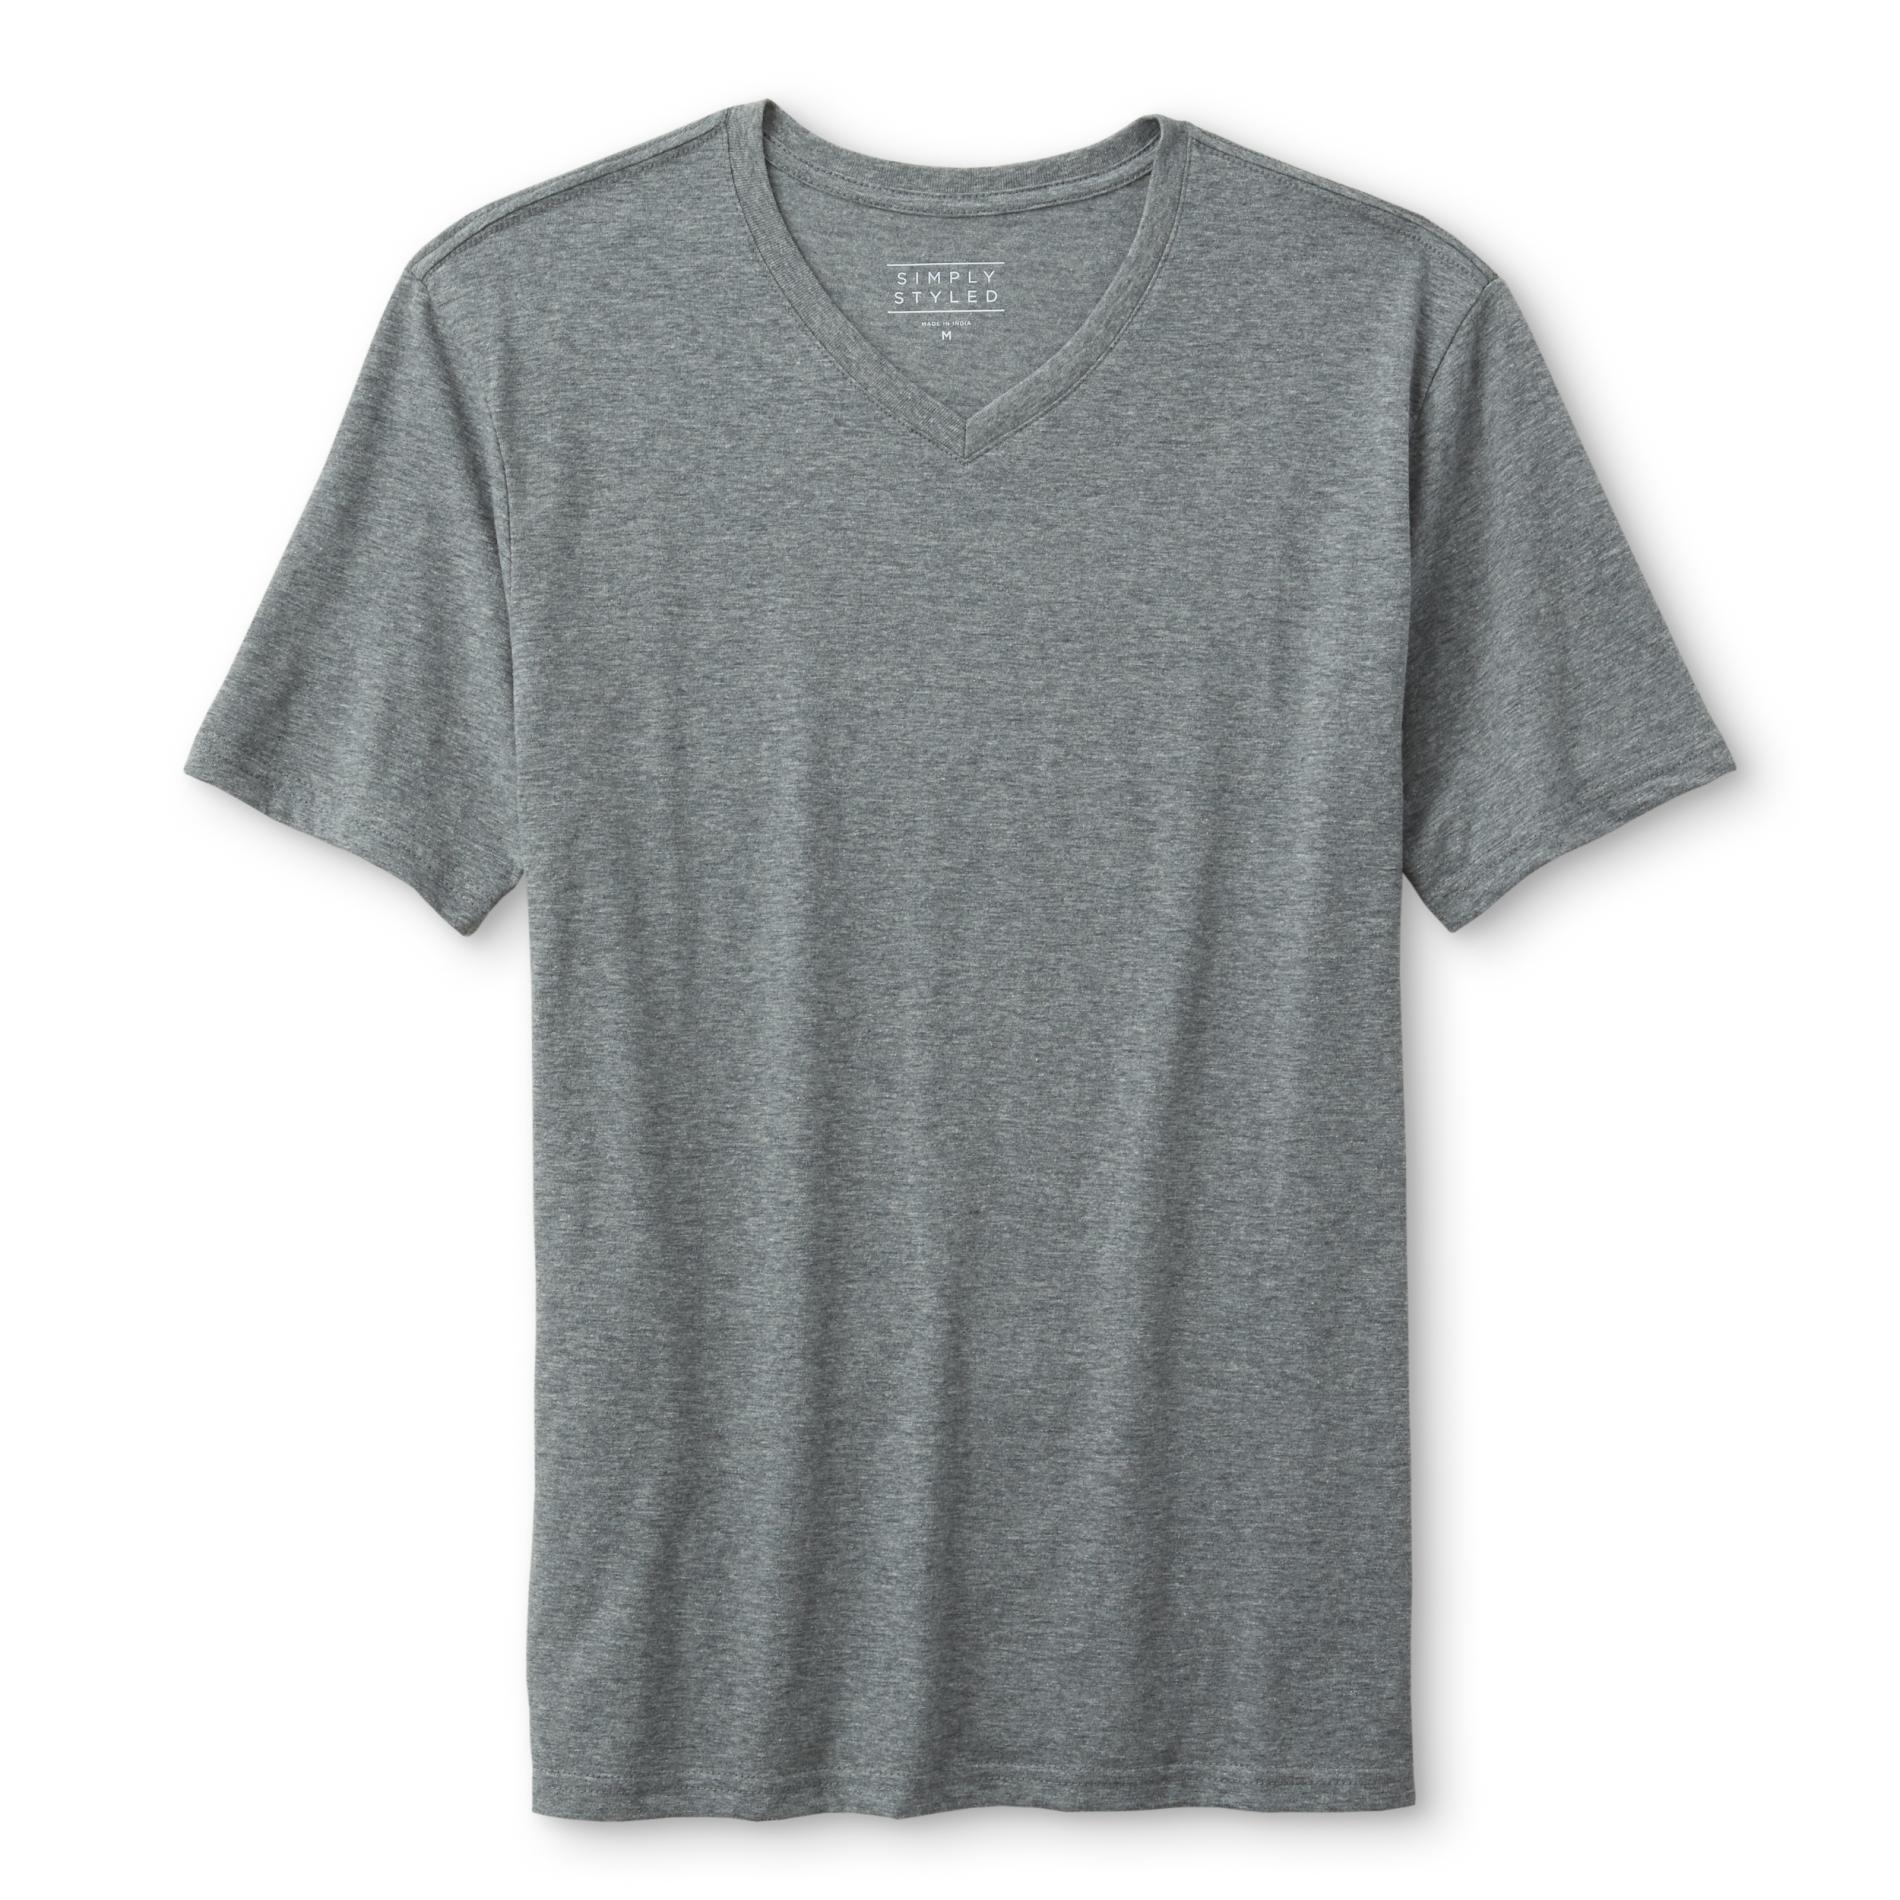 Simply Styled Men's V-Neck T-Shirt